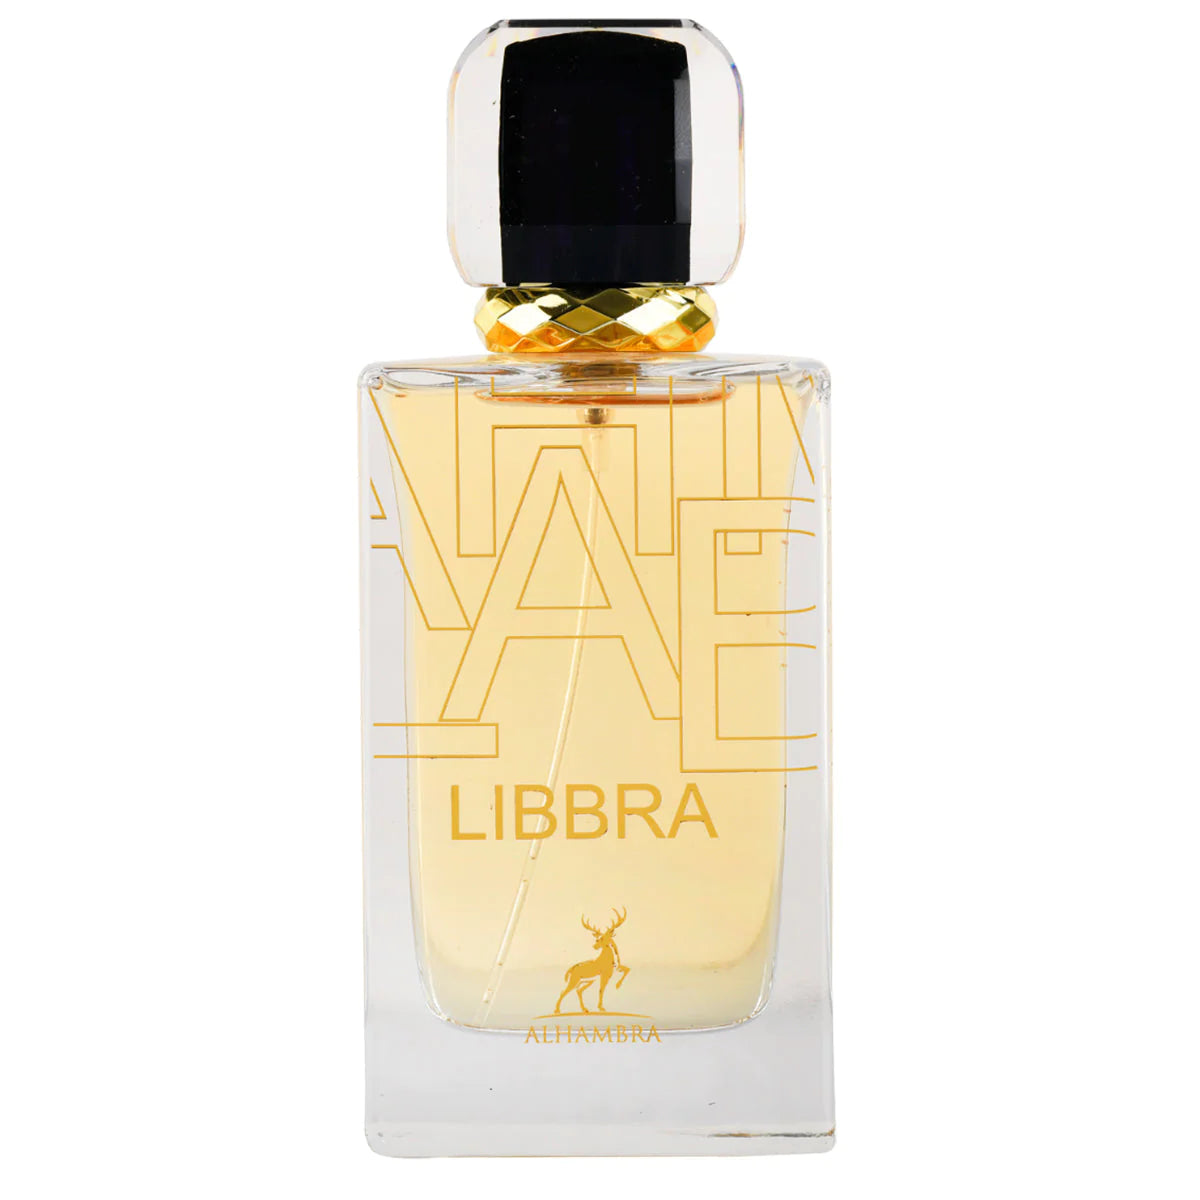 Libbra 100ml EDP (Eau De Parfum) By Maison Alhambra Perfumes